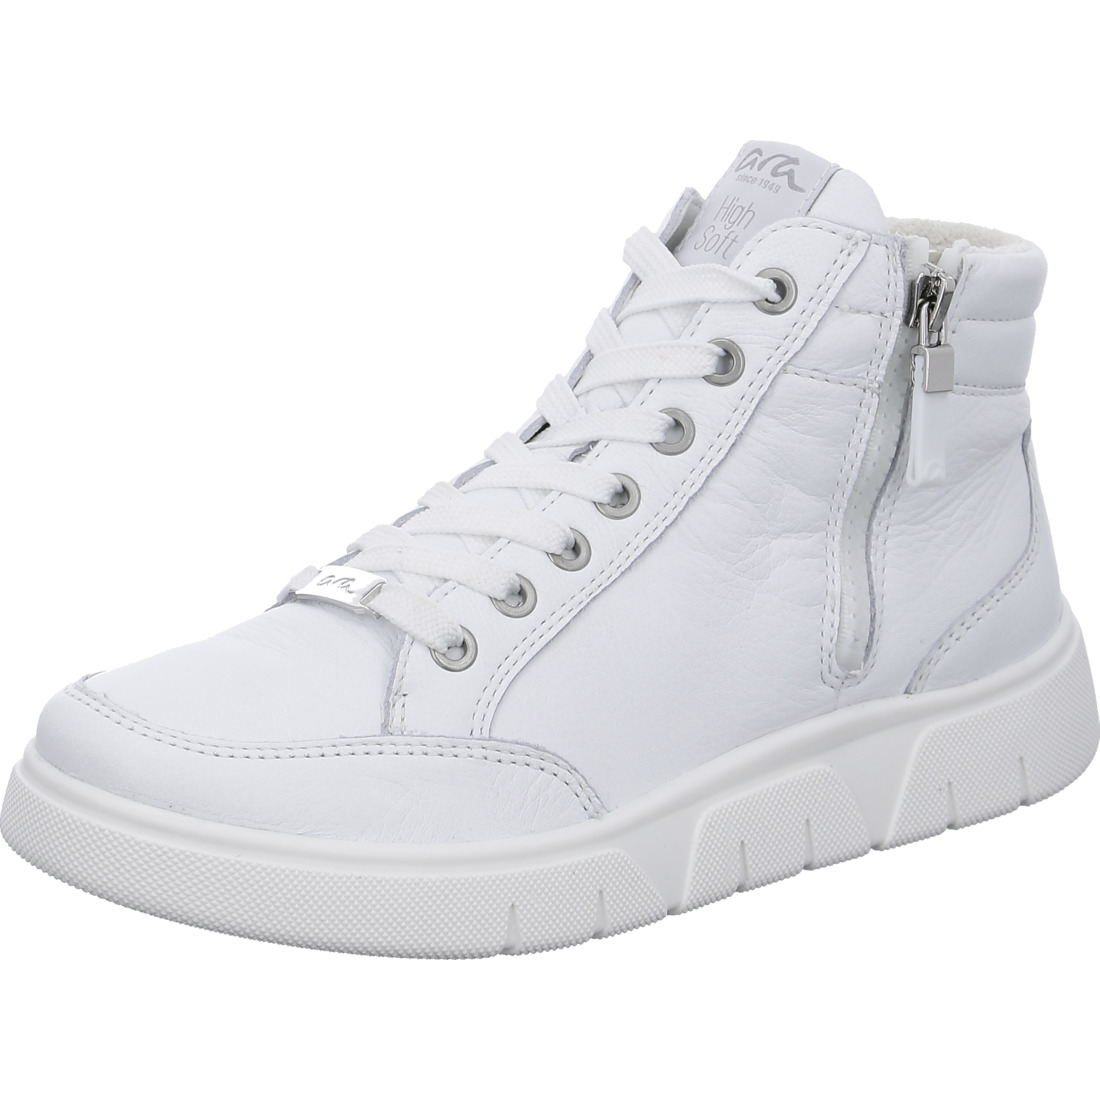 Chaussures à lacets*Ara Shoes Chaussures à lacets Bottines Rom-Sport blanches